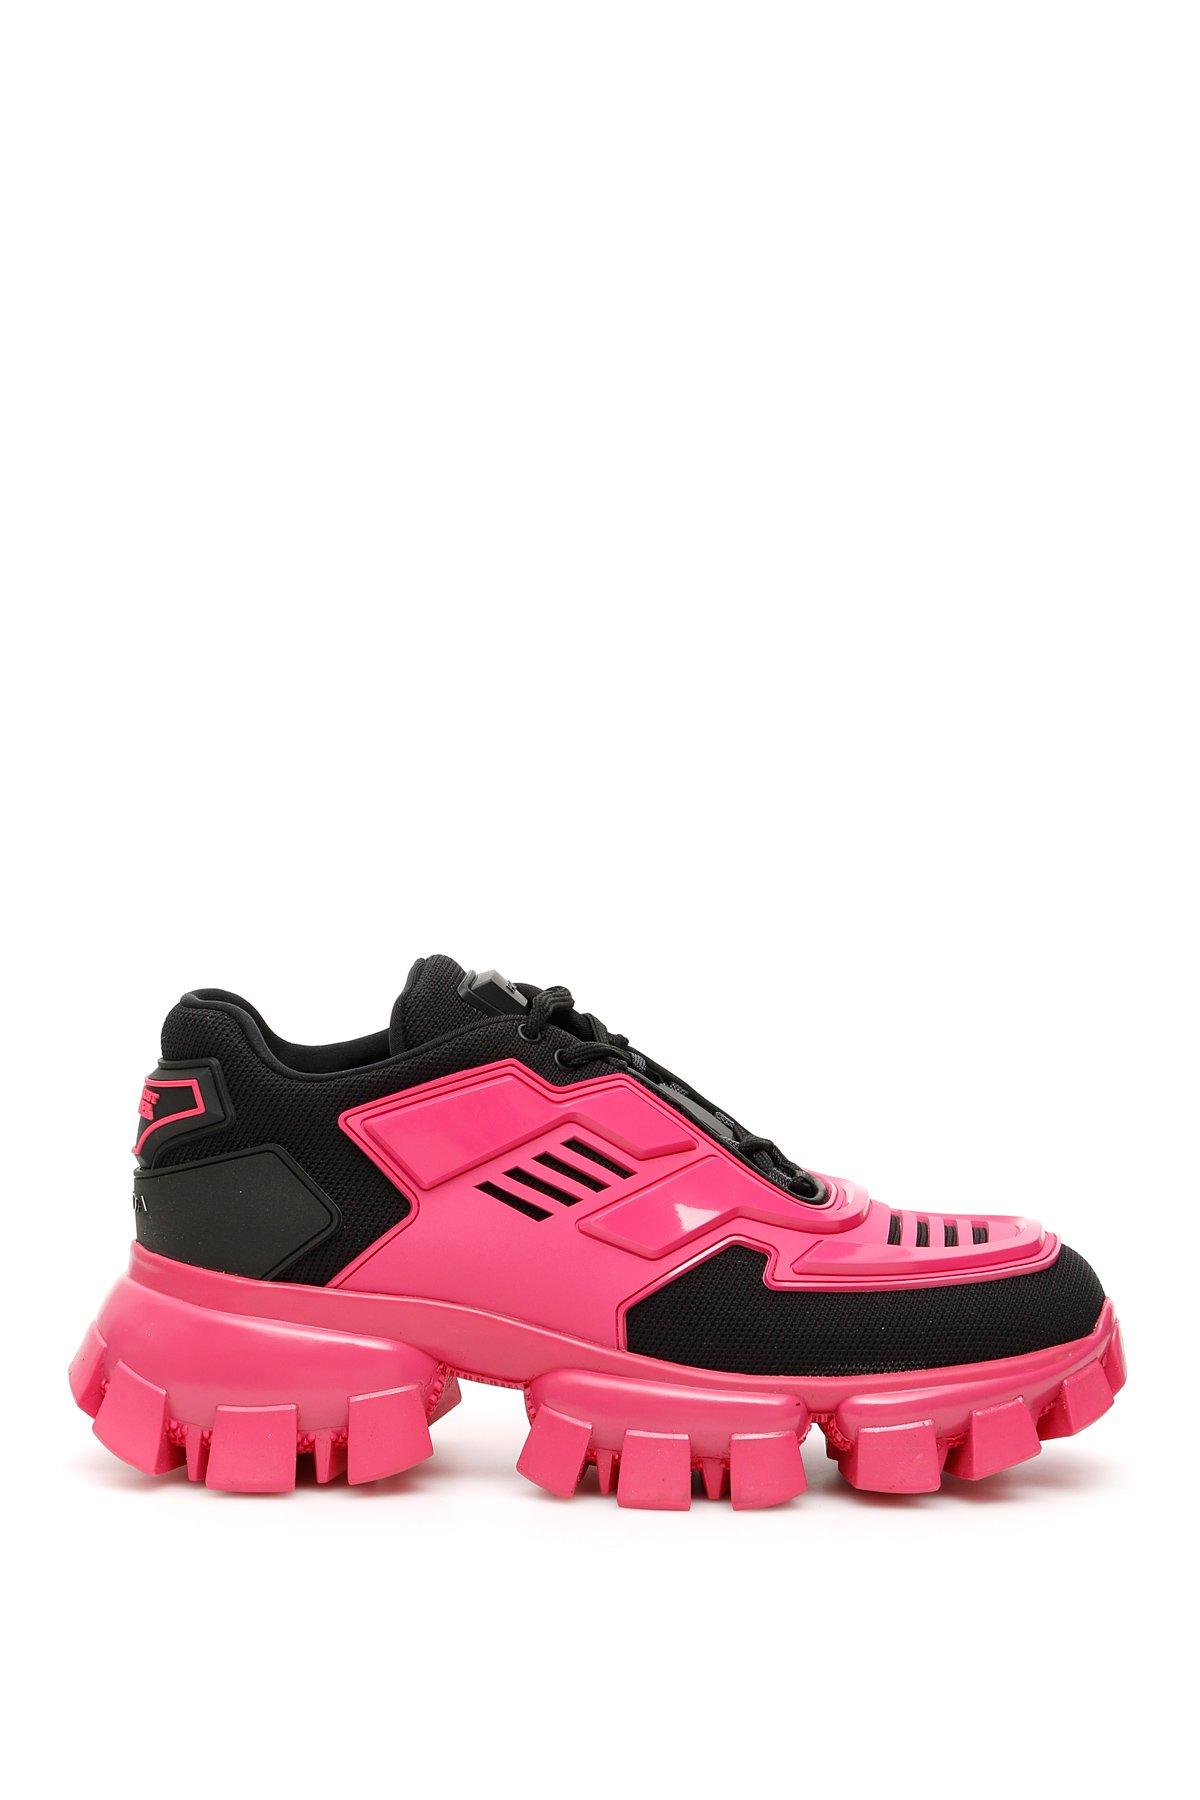 Prada Cloudburst Thunder Panelled Sneakers in Pink | Lyst